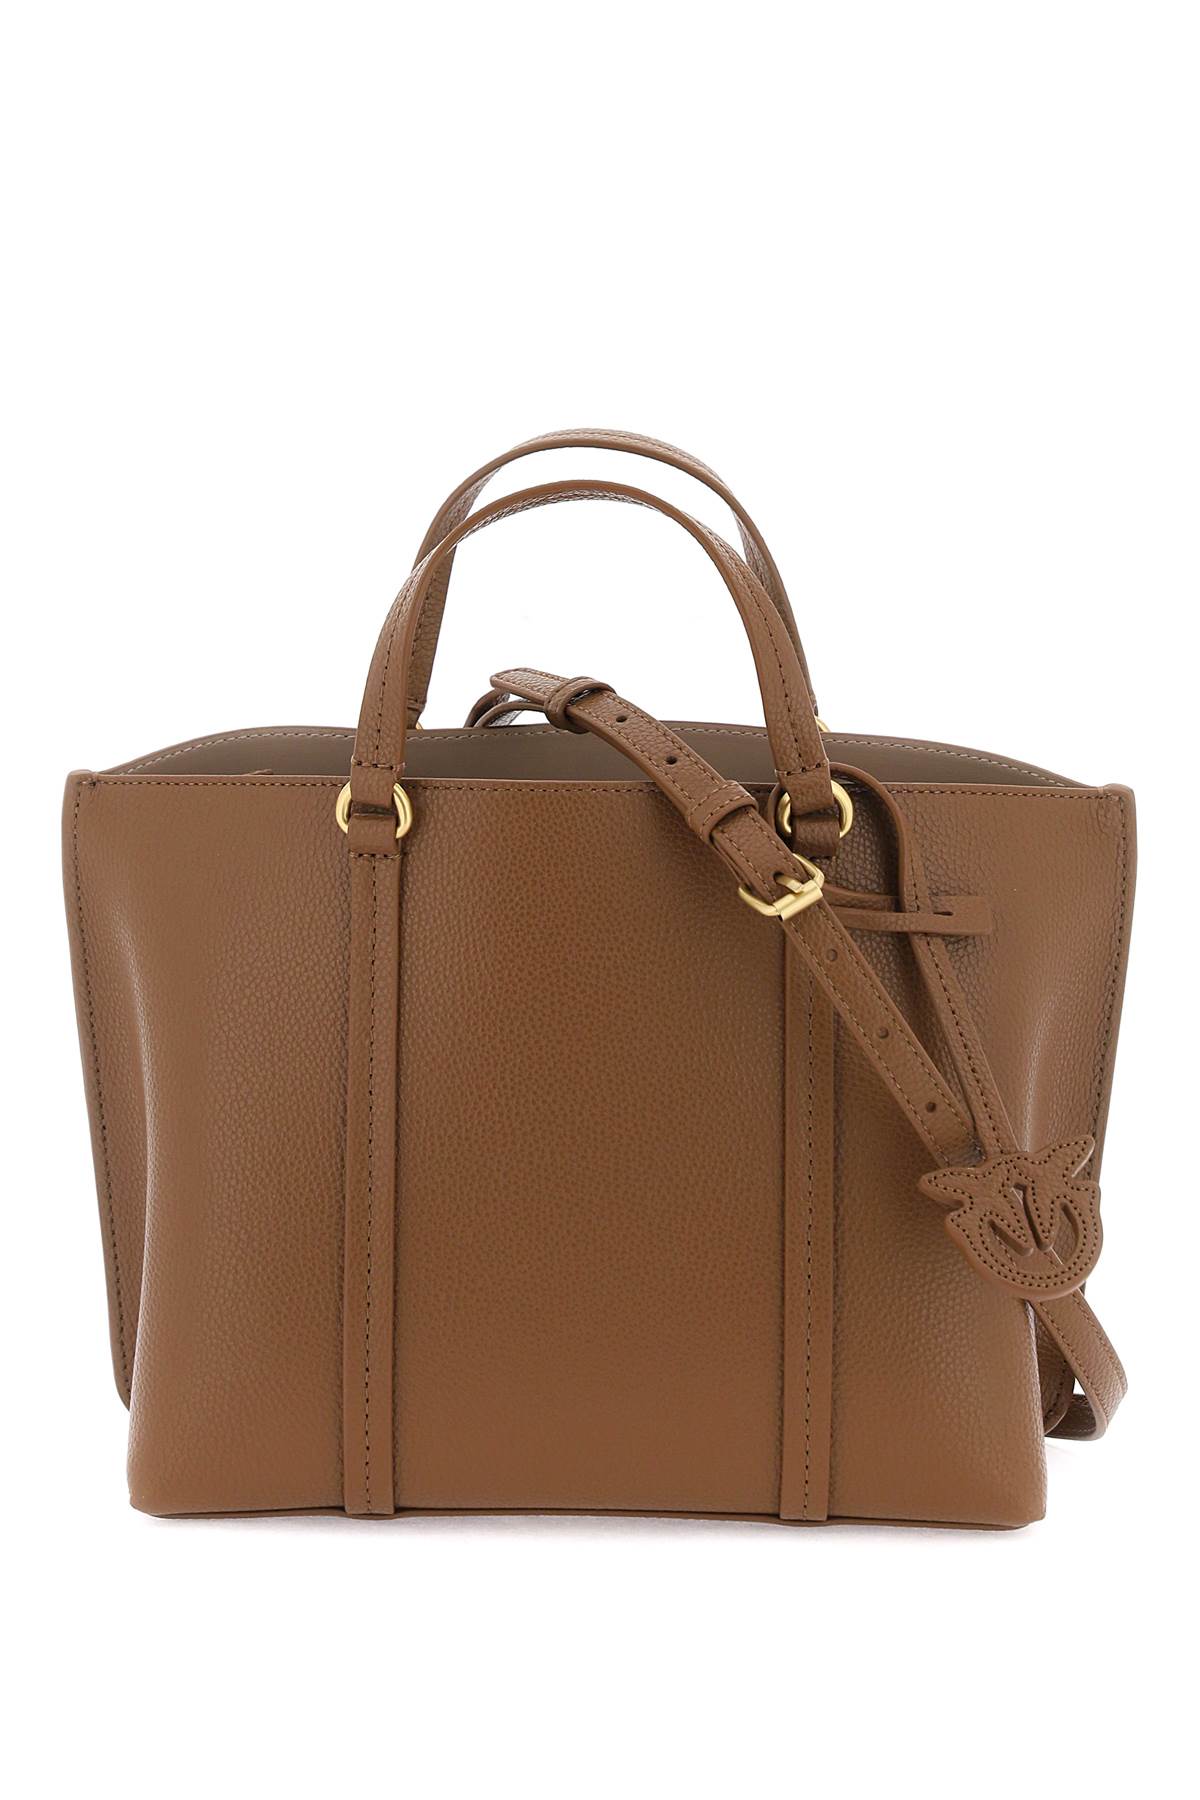 Pinko carrie shopper classic handbag-0